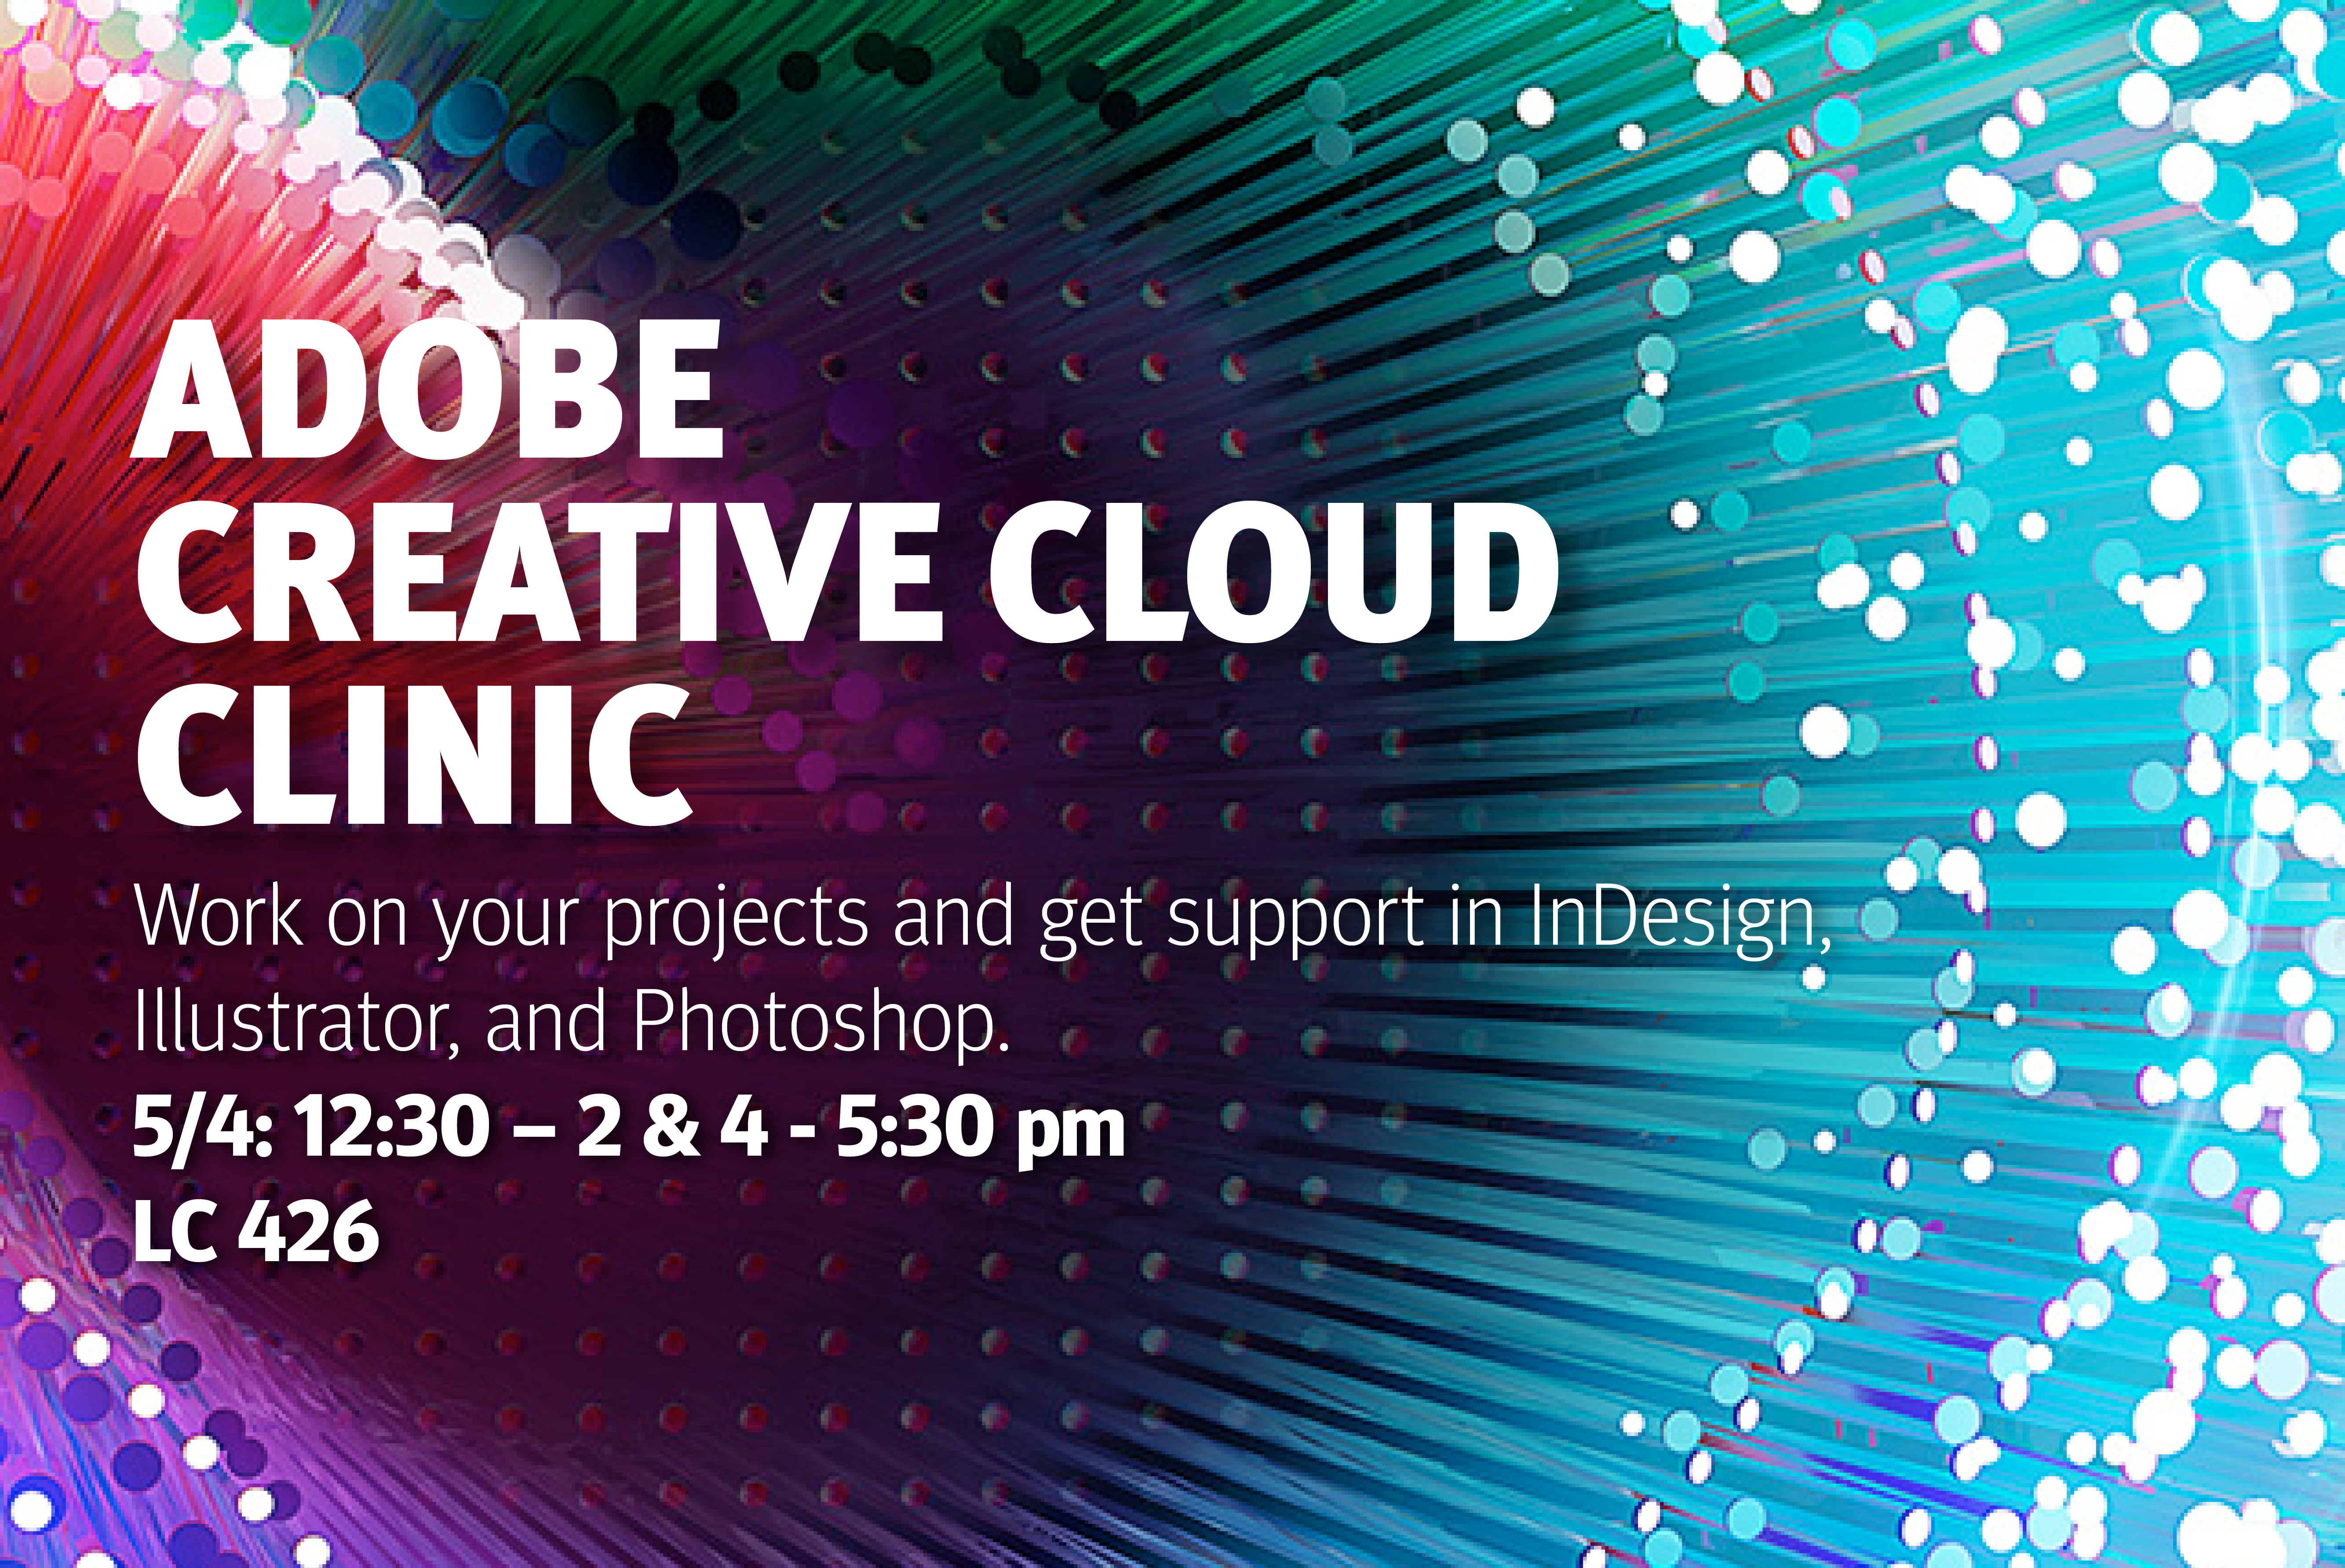 Adobe Creative Cloud Clinic